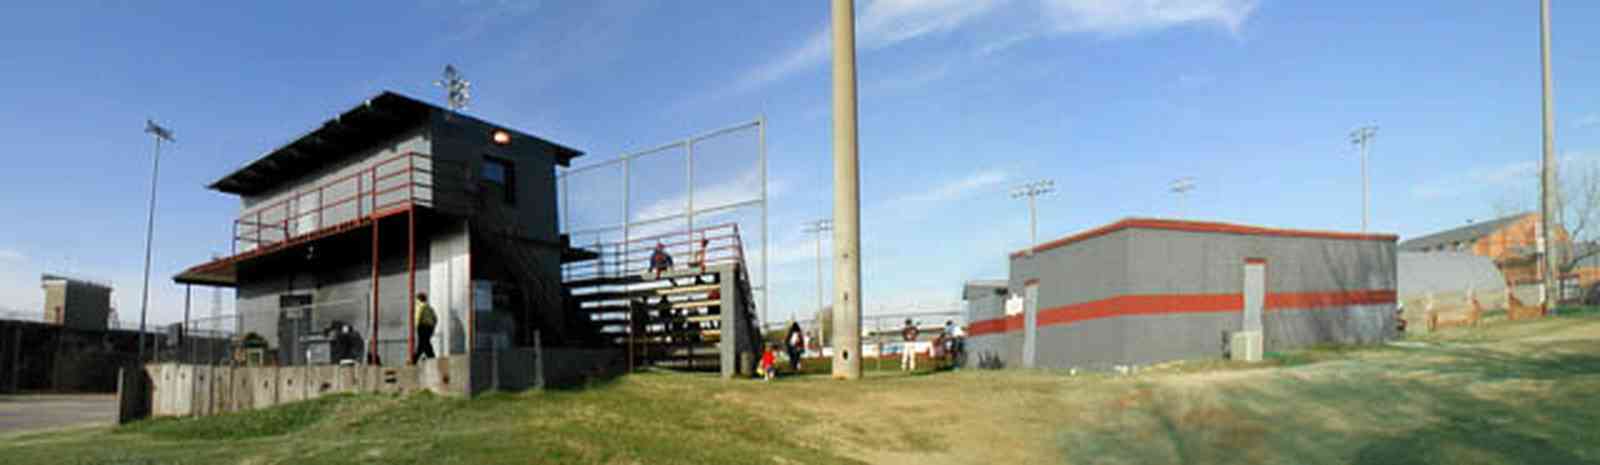 Pensacola:-Tate-High-School_10.jpg:  baseball field, stadium, ball field, escambia county, gonzales